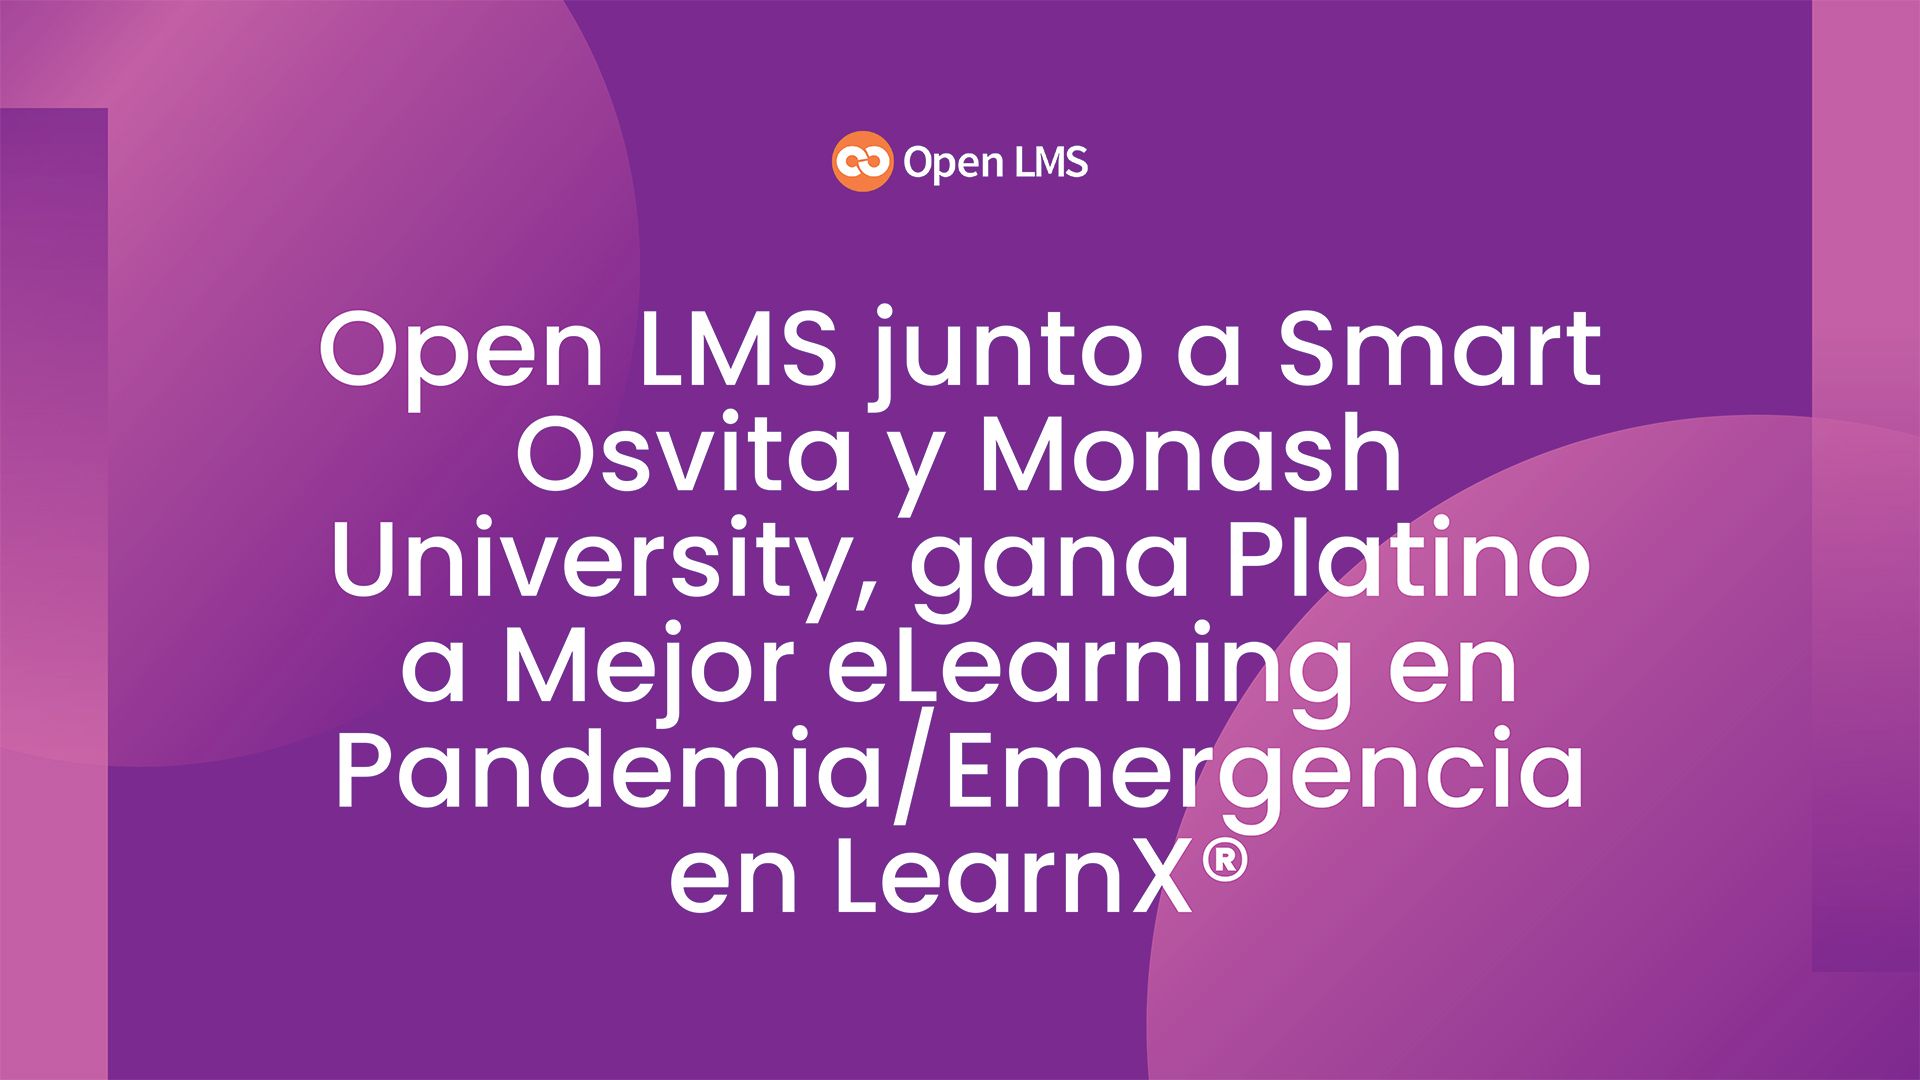 Open LMS junto a Smart Osvita y Monash University, gana Platino a Mejor eLearning en Pandemia/Emergencia en LearnX®